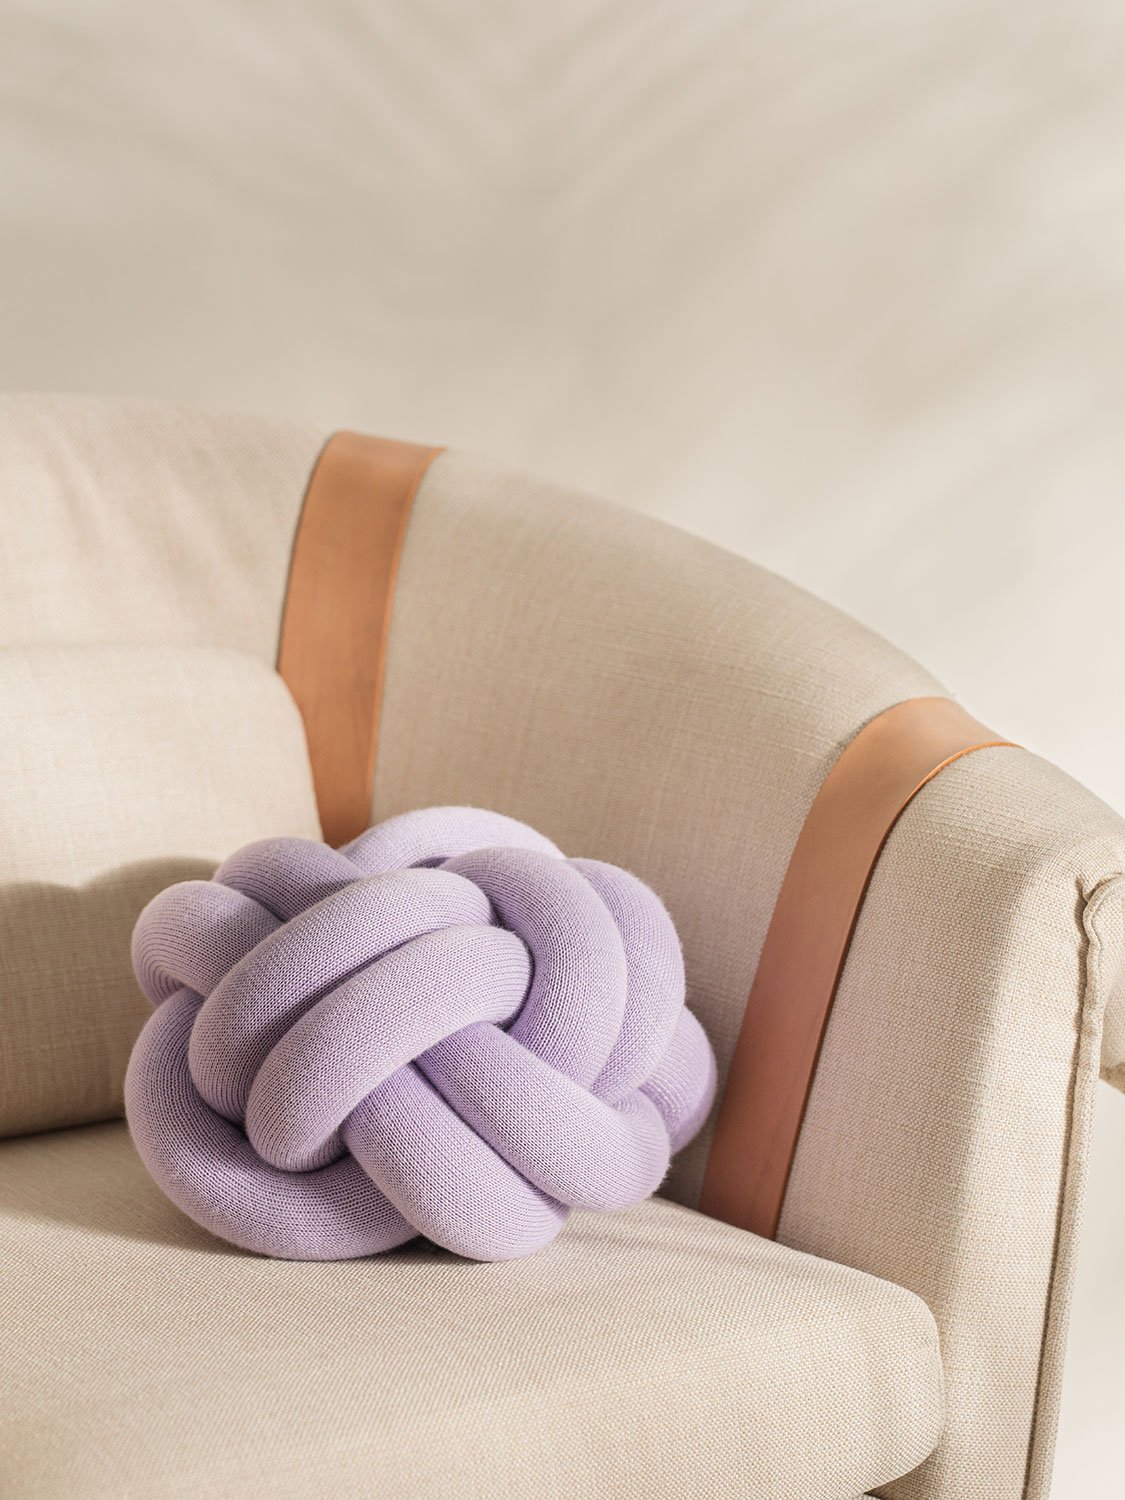 design-house-stockholm-knot-cushion-8.jpeg